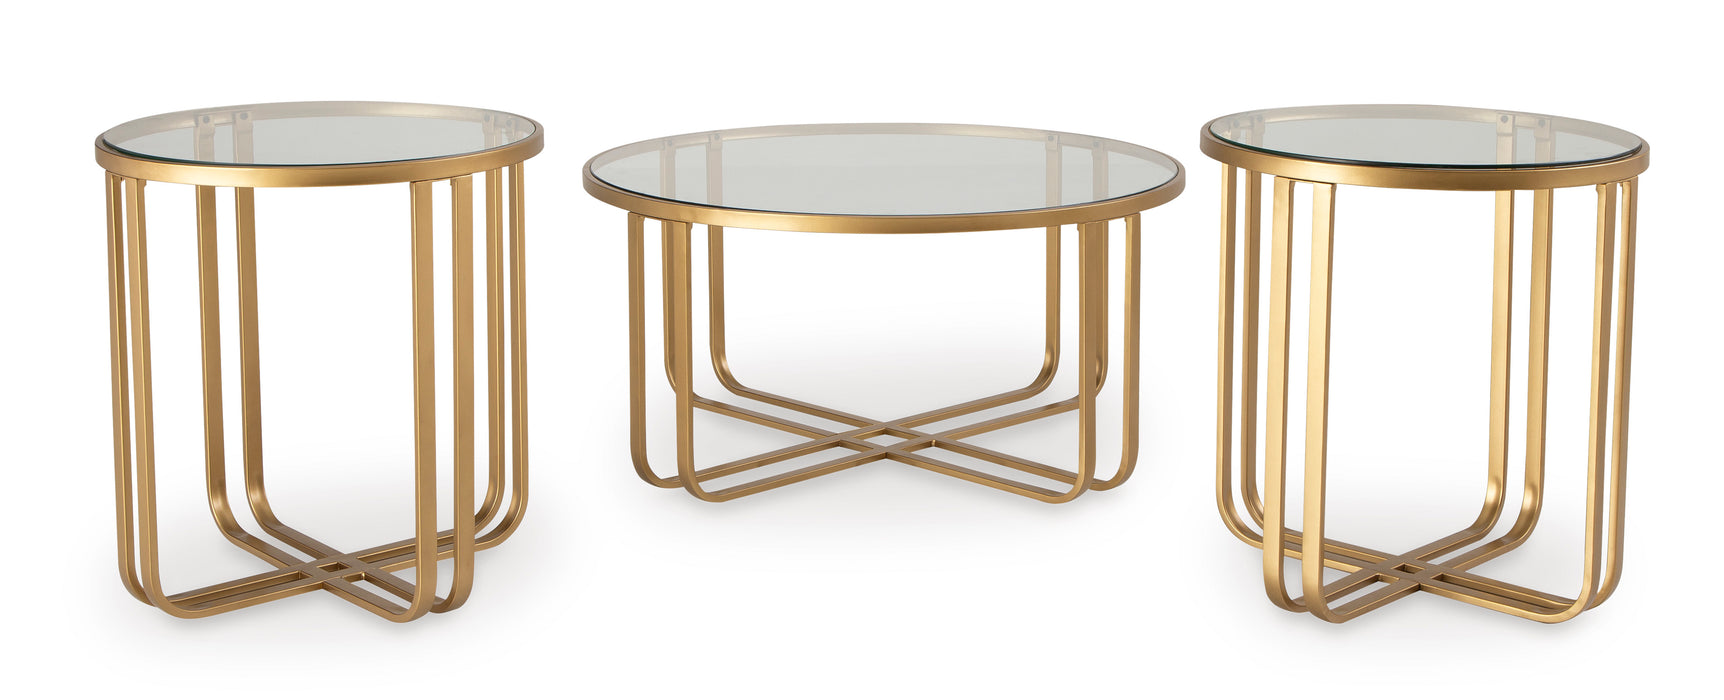 Milloton 3Pc Coffee Table Set - Gold